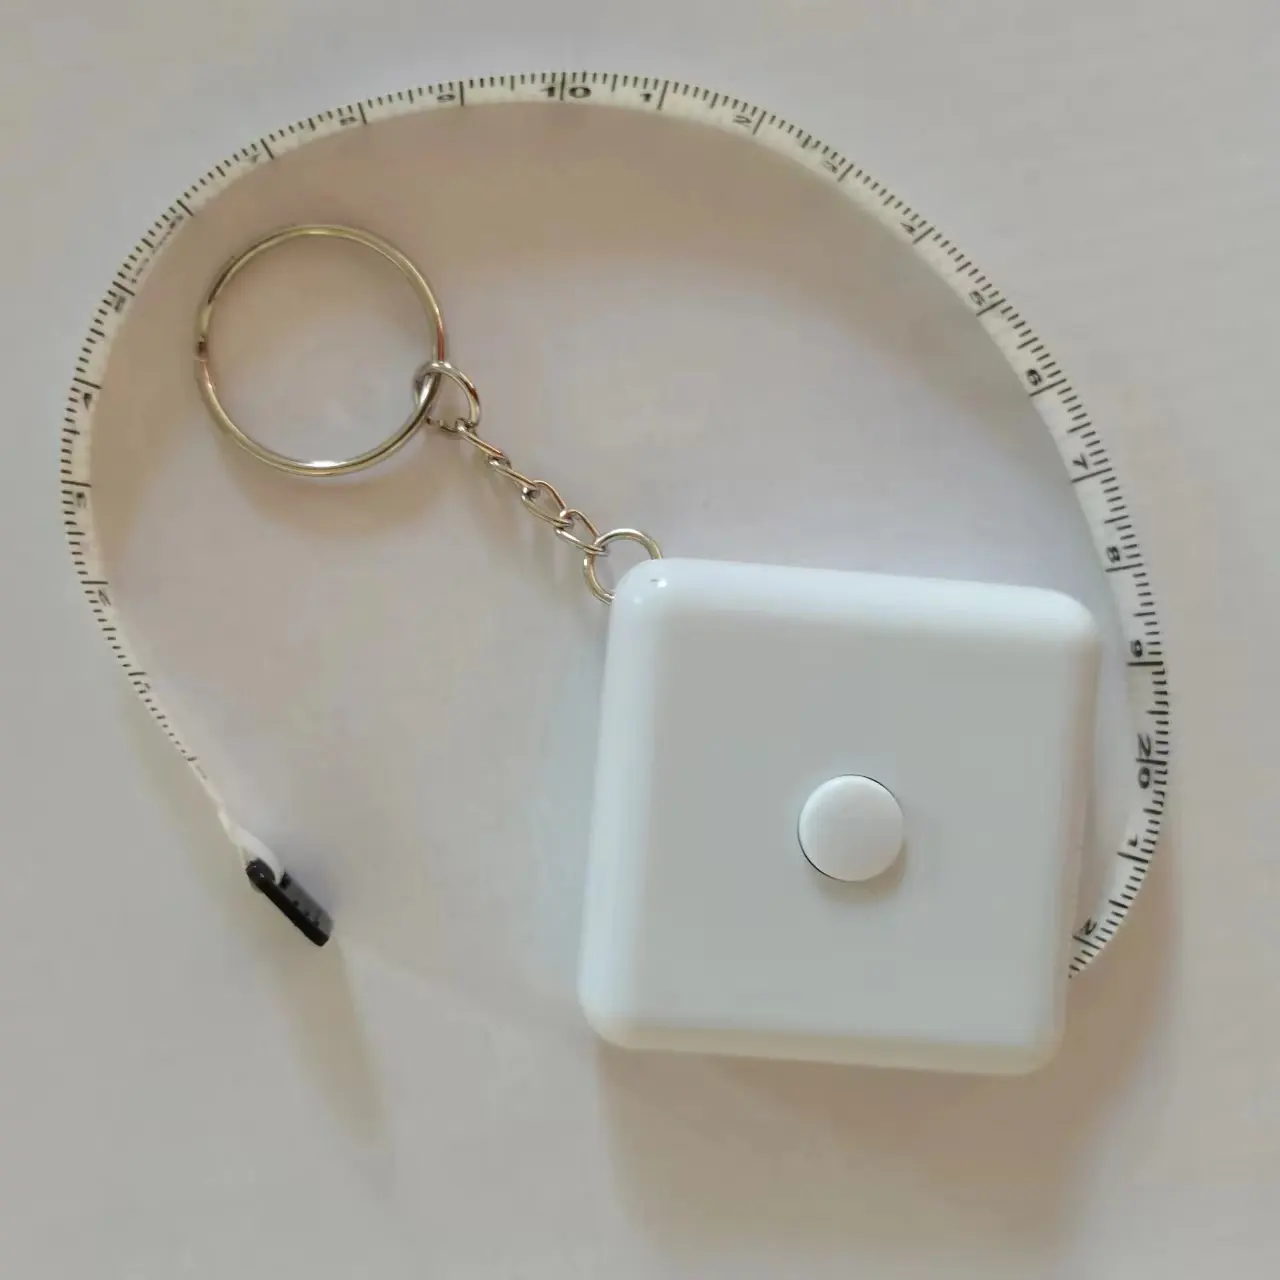 Wholesale Square Ruler Custom High Quality Plastic Tools Mini Tape Measure With Metal Key Ring Keychain